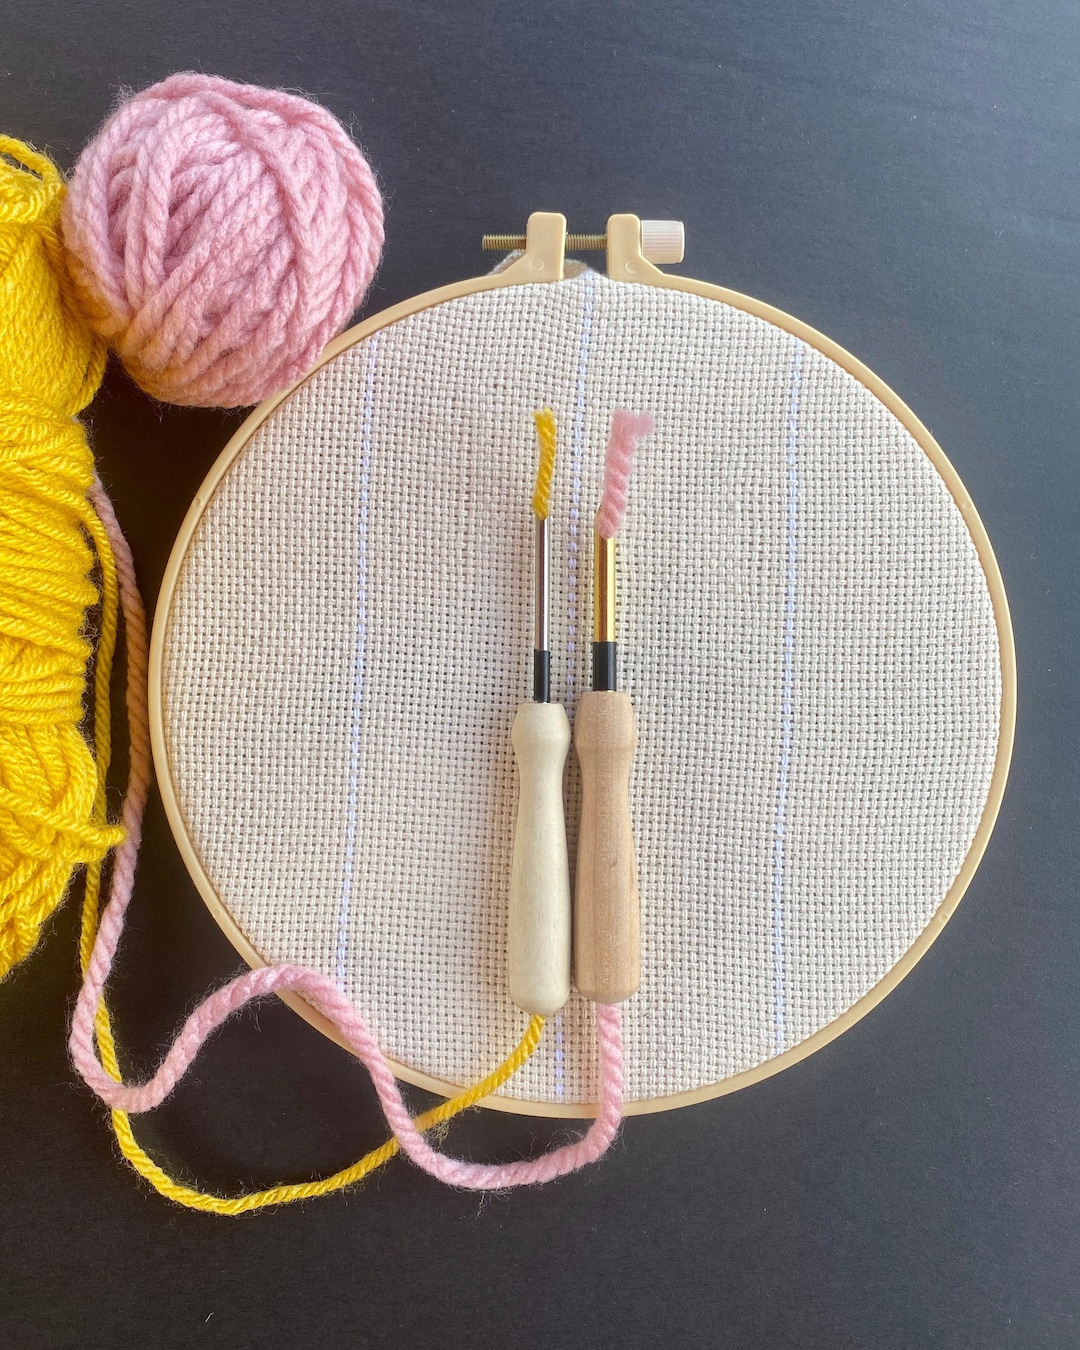 DABOOM Punch Needle Kits, DIY Rug Hooking Kit for Adults Kids